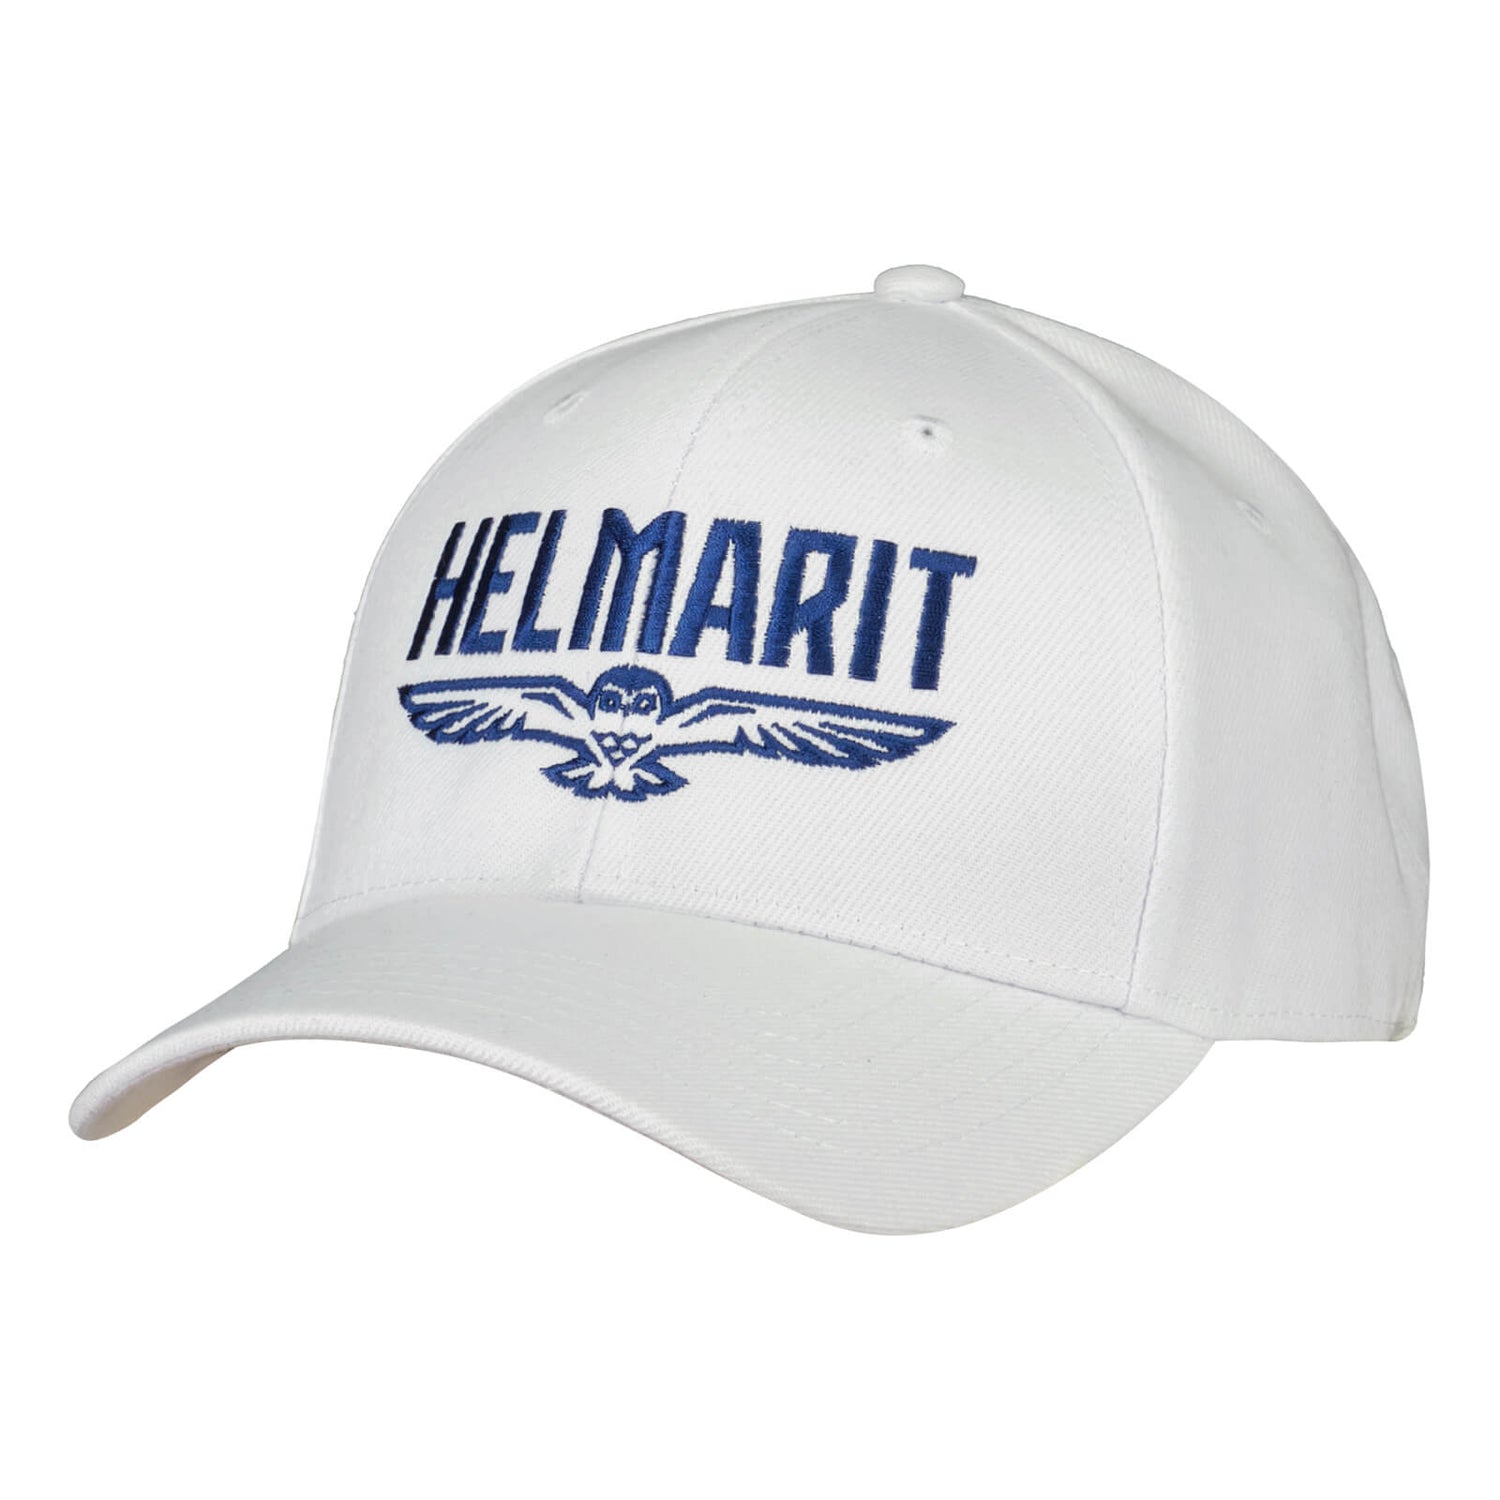 Helmarit 2.0 cap, White